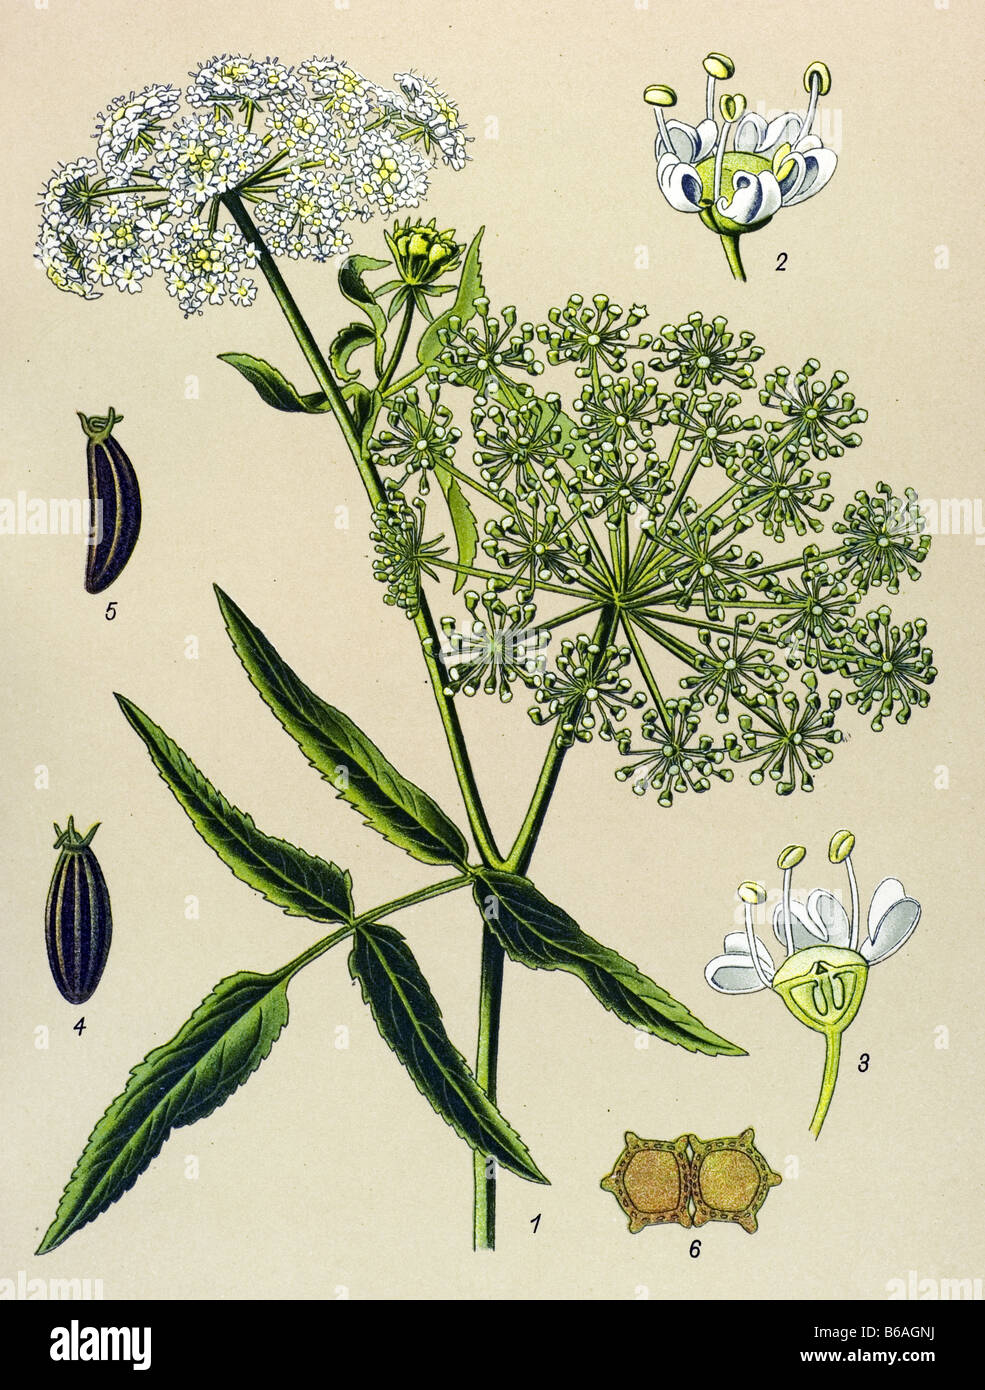 Greater Water parsnip, Sium latifolium poisonous plants illustrations Stock Photo